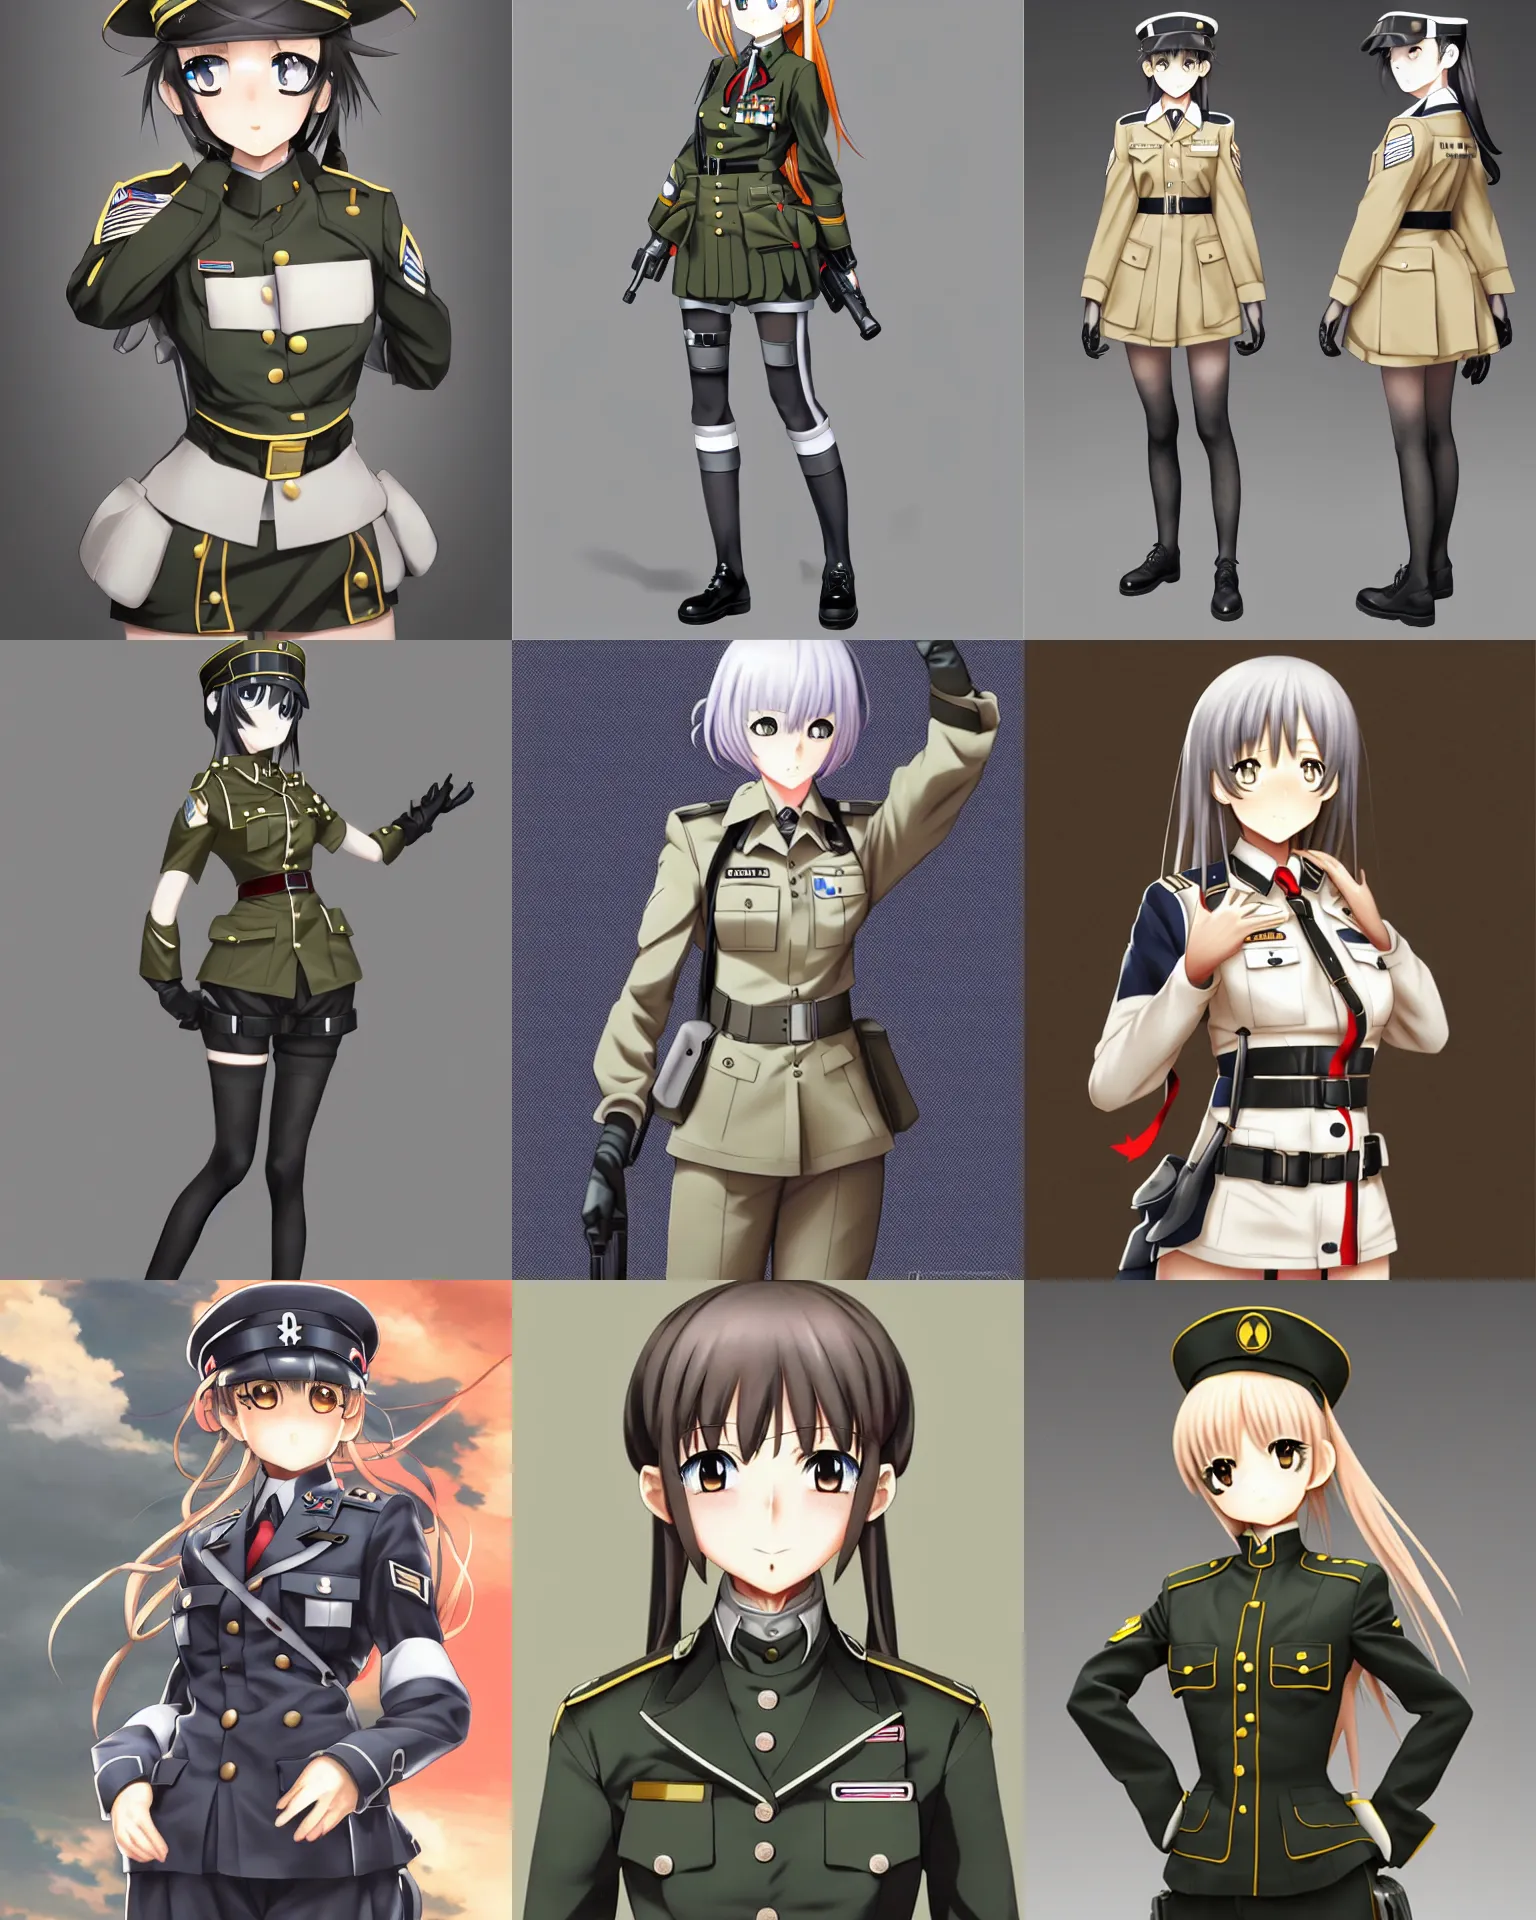 Prompt: anime girl with a military uniform, by range murata, artisanal art, magical trending on artstation, volumetric lighting, cute - fine - face, intricate detail, by murata range